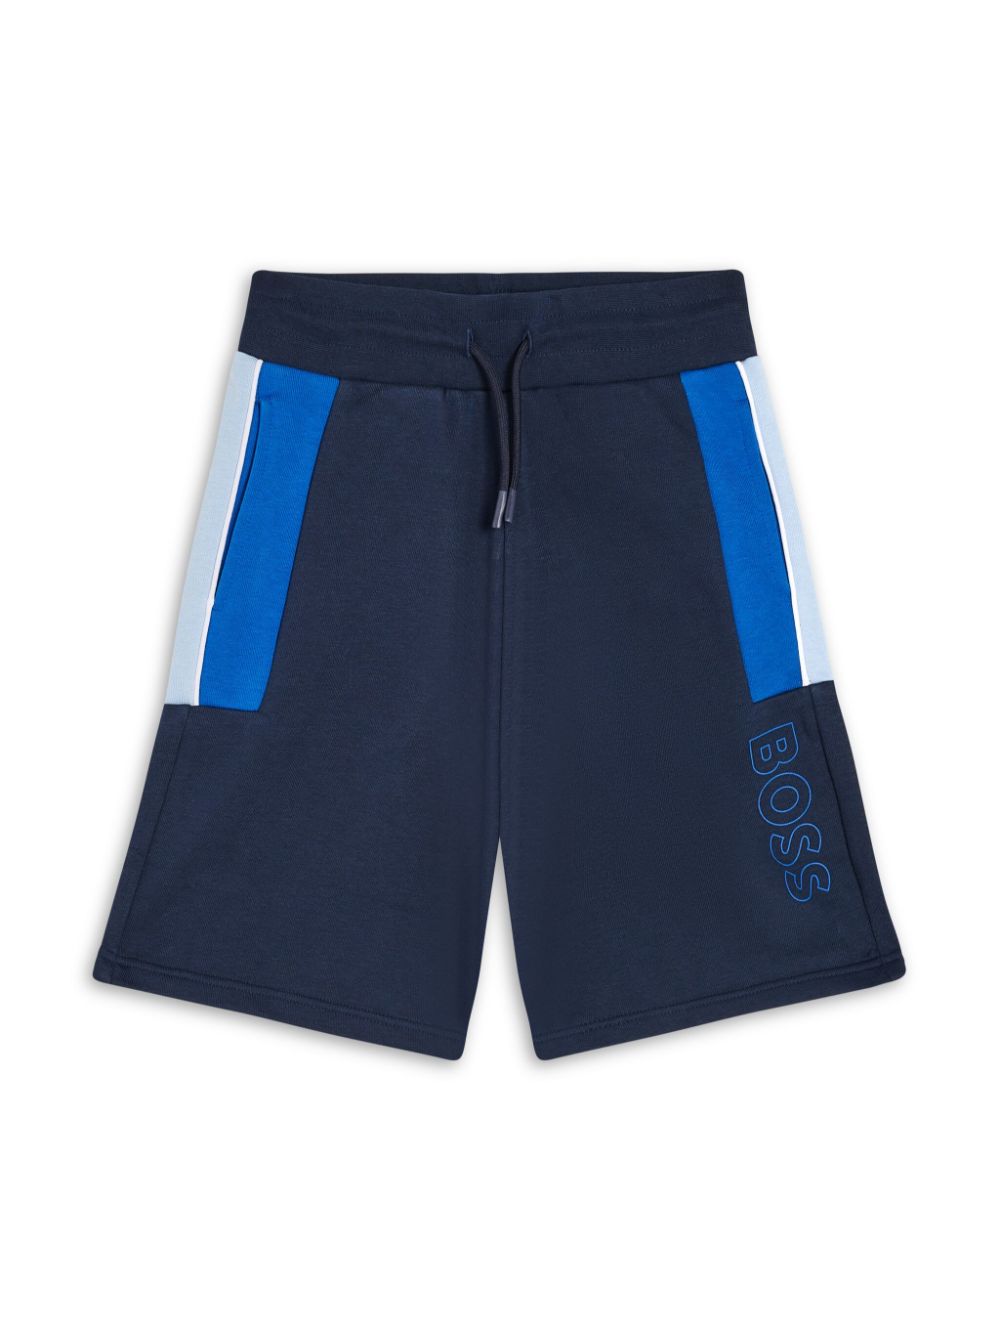 Blue Bermuda shorts for boys